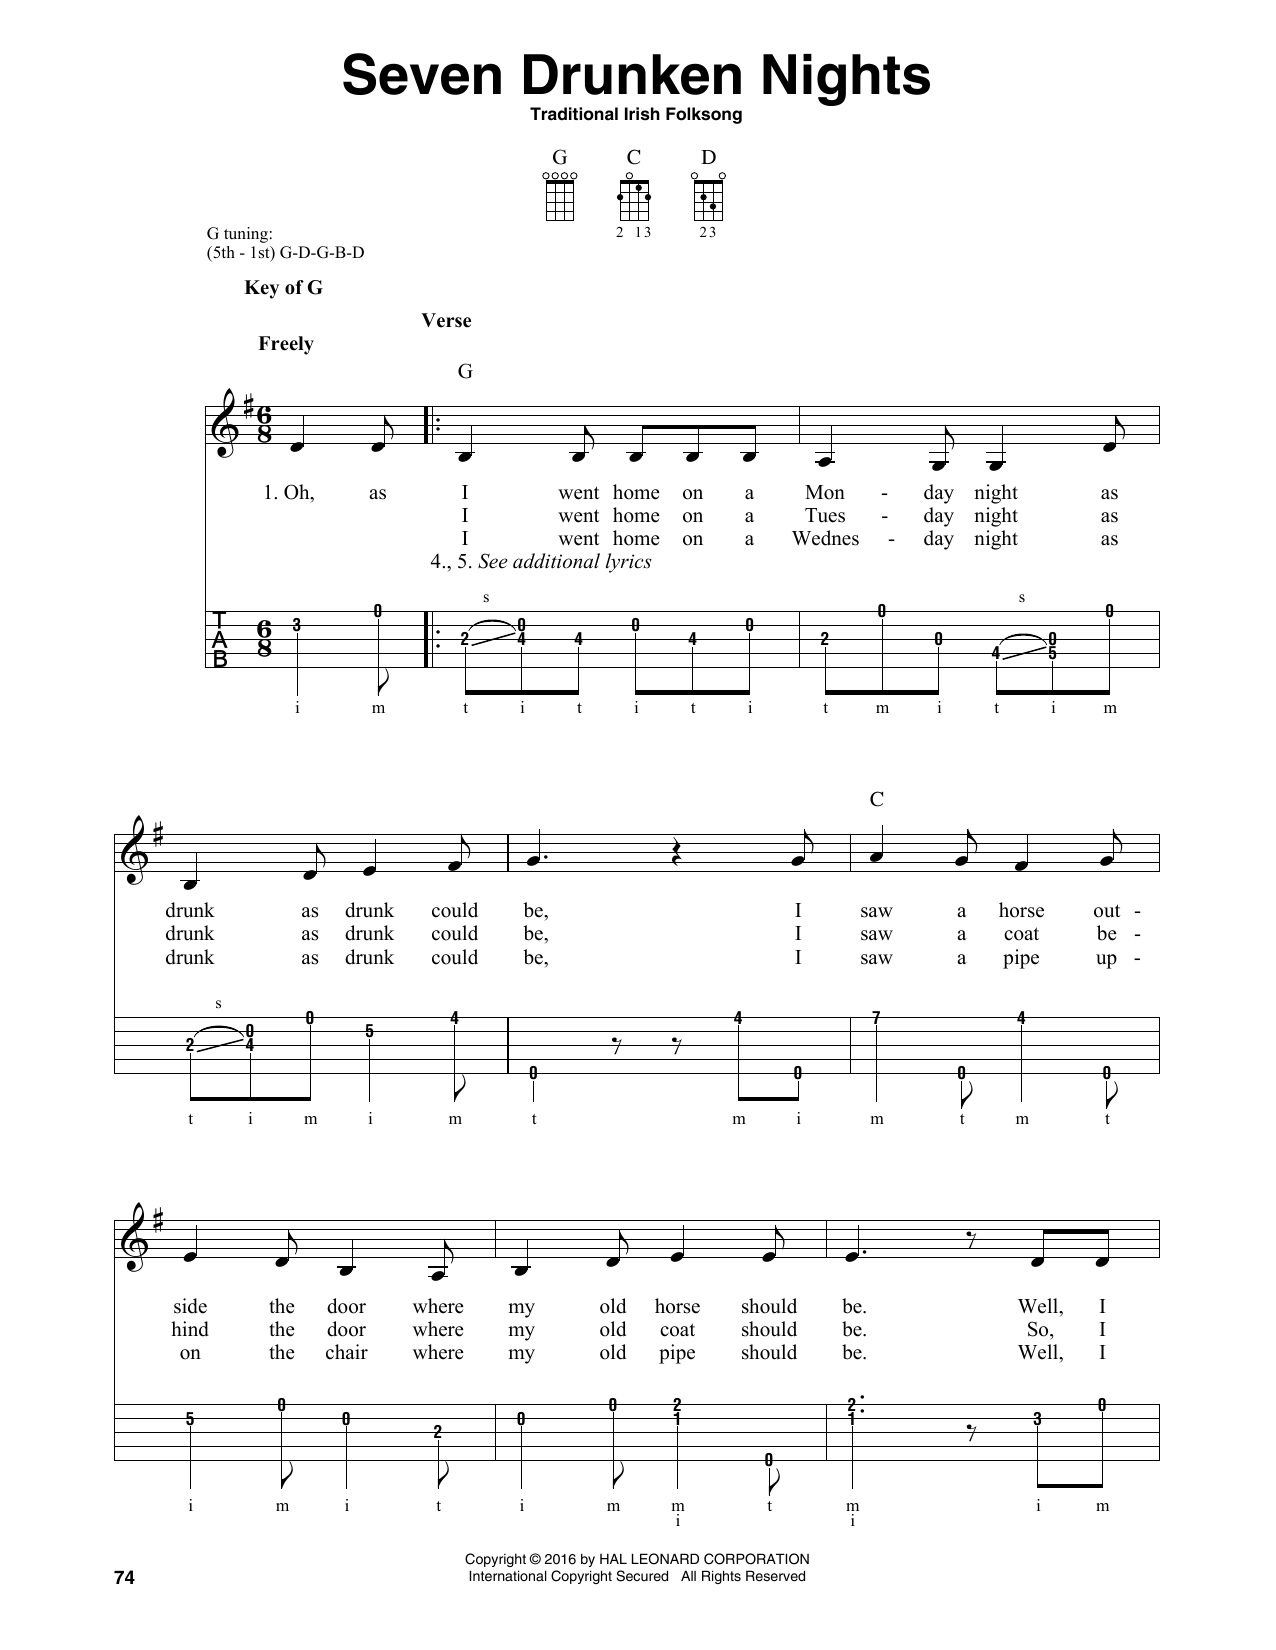 Traditional Irish Folk Song Seven Drunken Nights Sheet Music Notes & Chords for Banjo - Download or Print PDF